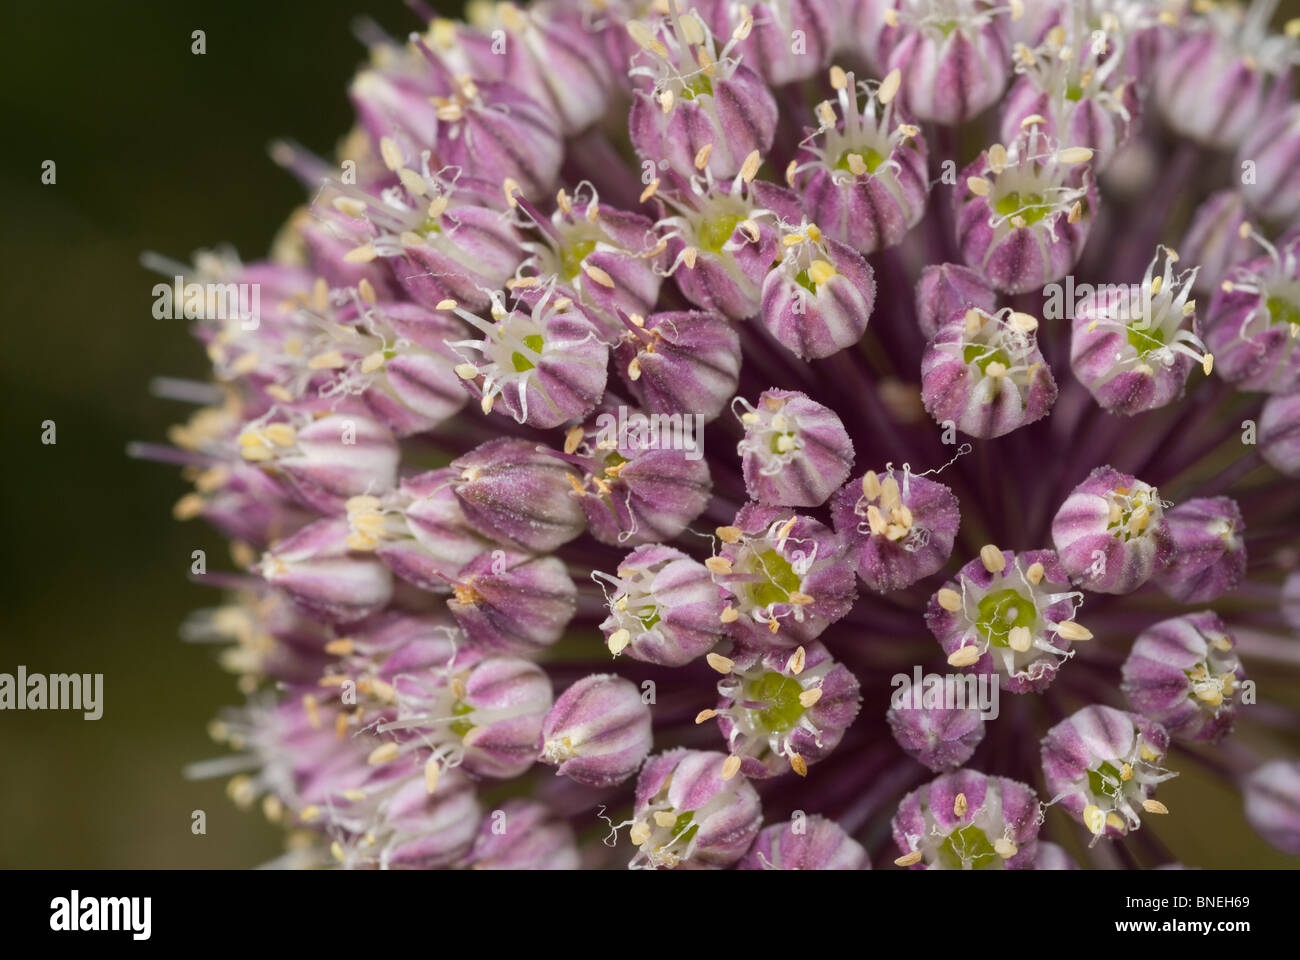 Broadleaf wild Leek (Allium ampeloprasum) Stock Photo